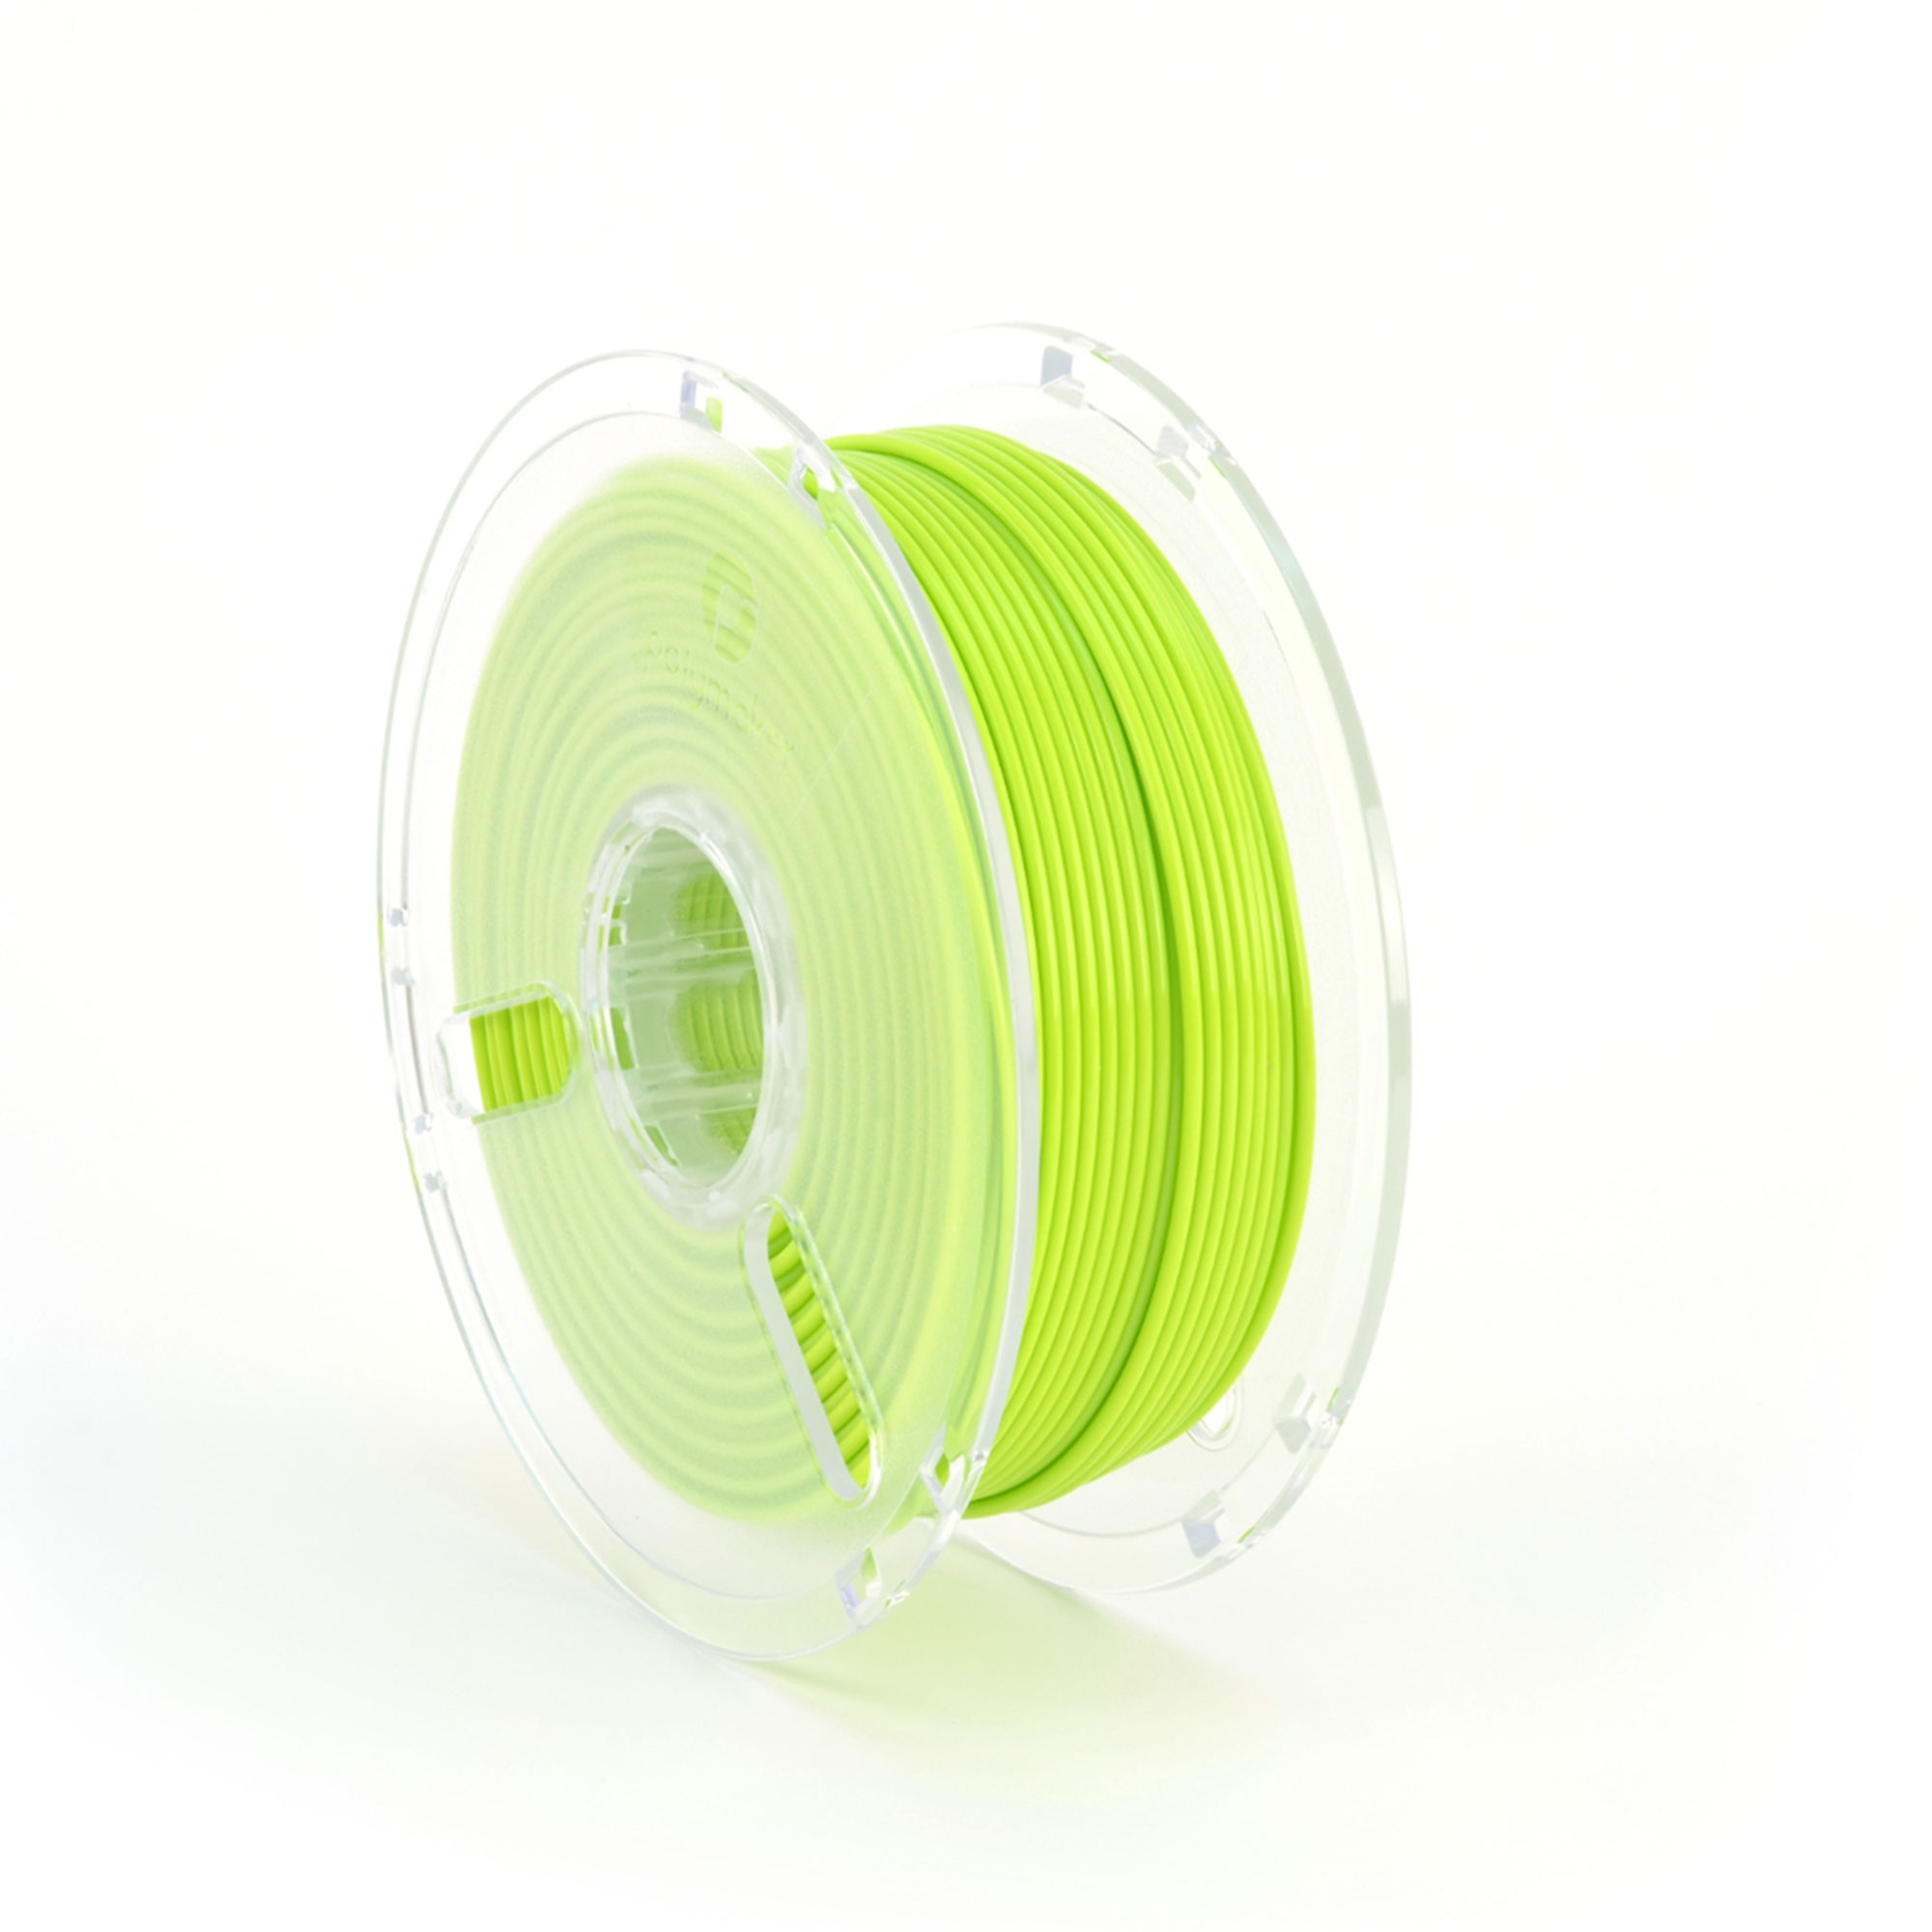 3d Printer Filament Lulzbot Green 2.85mm 1kg Reel